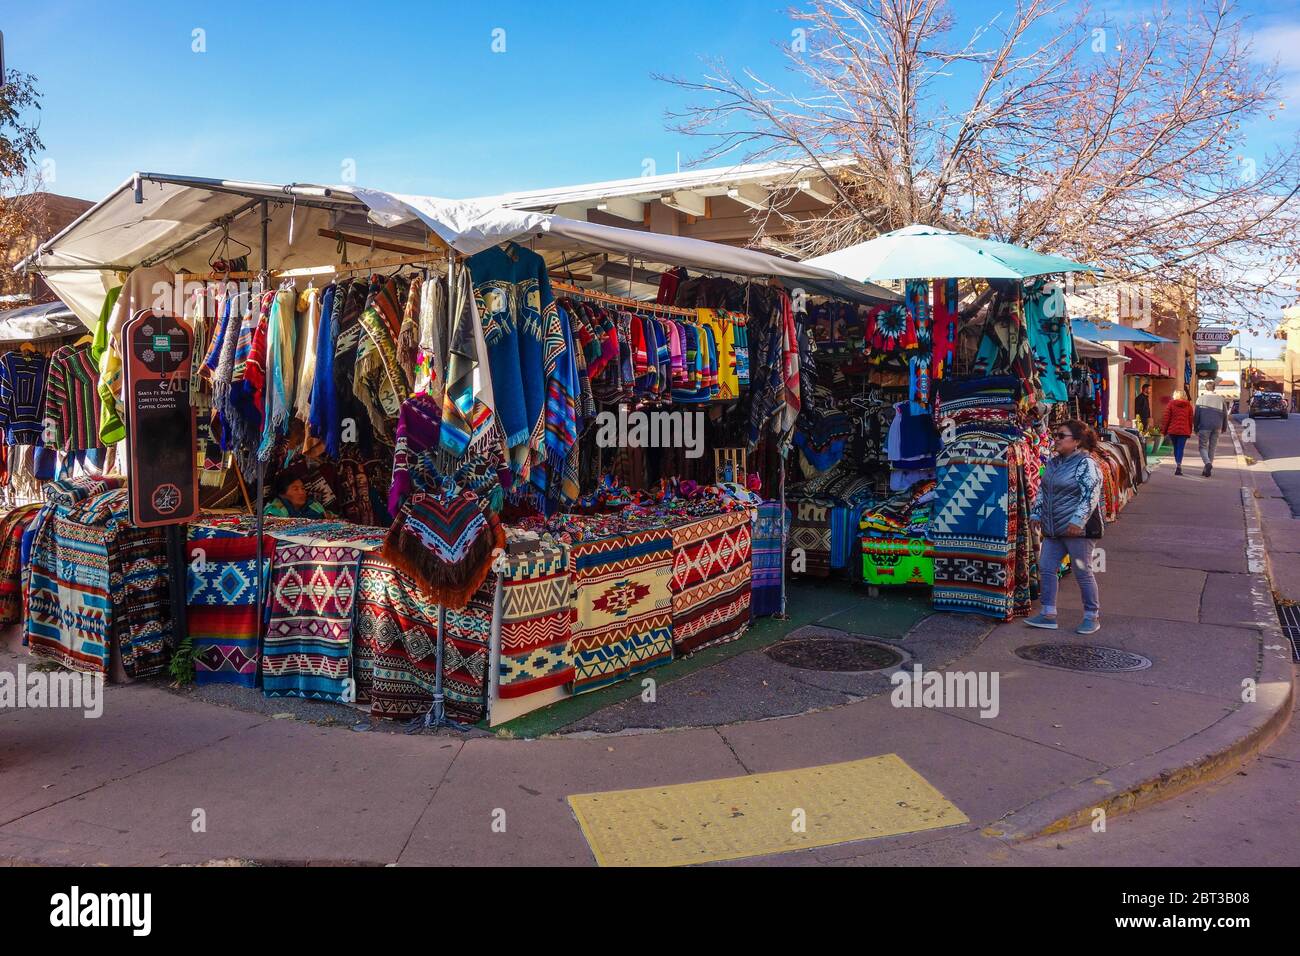 Rugs on display in market in Santa Fe, NM Stock Photo